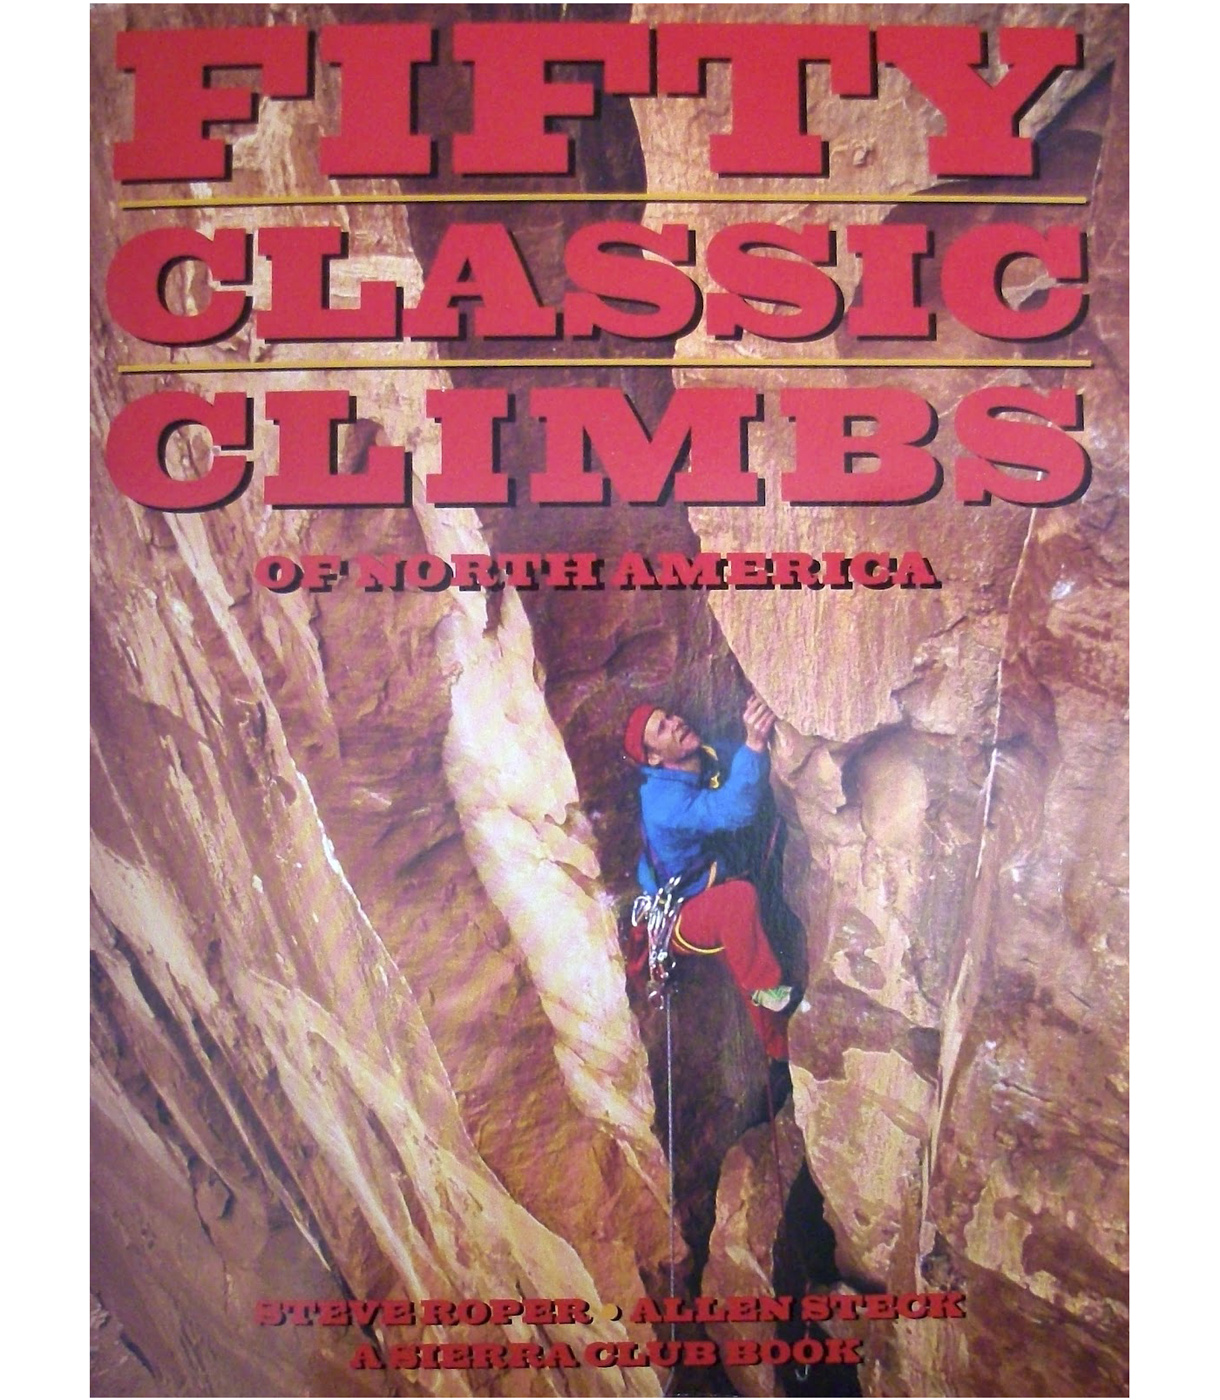 50-classic-climbs